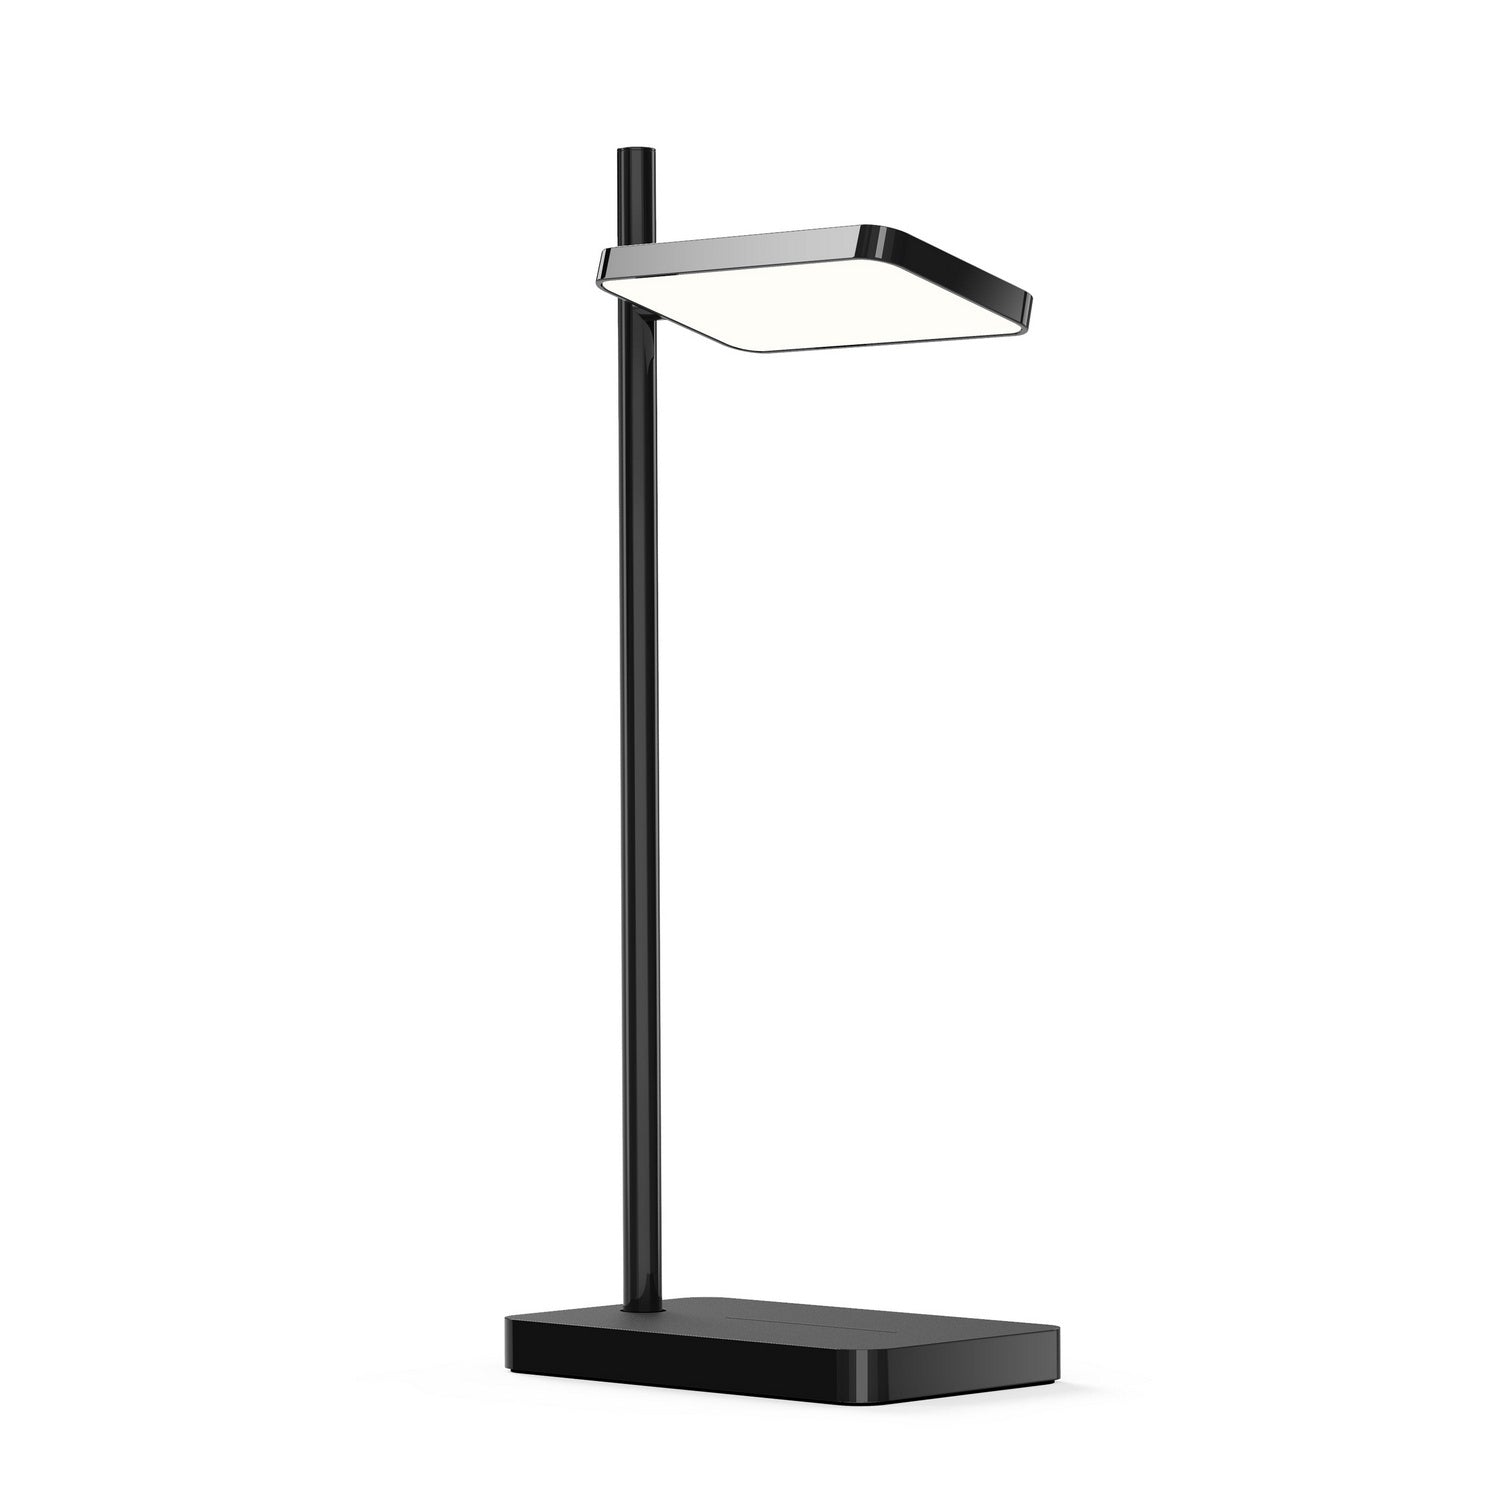 Pablo Designs - LED Table Lamp - Talia - Black- Union Lighting Luminaires Decor